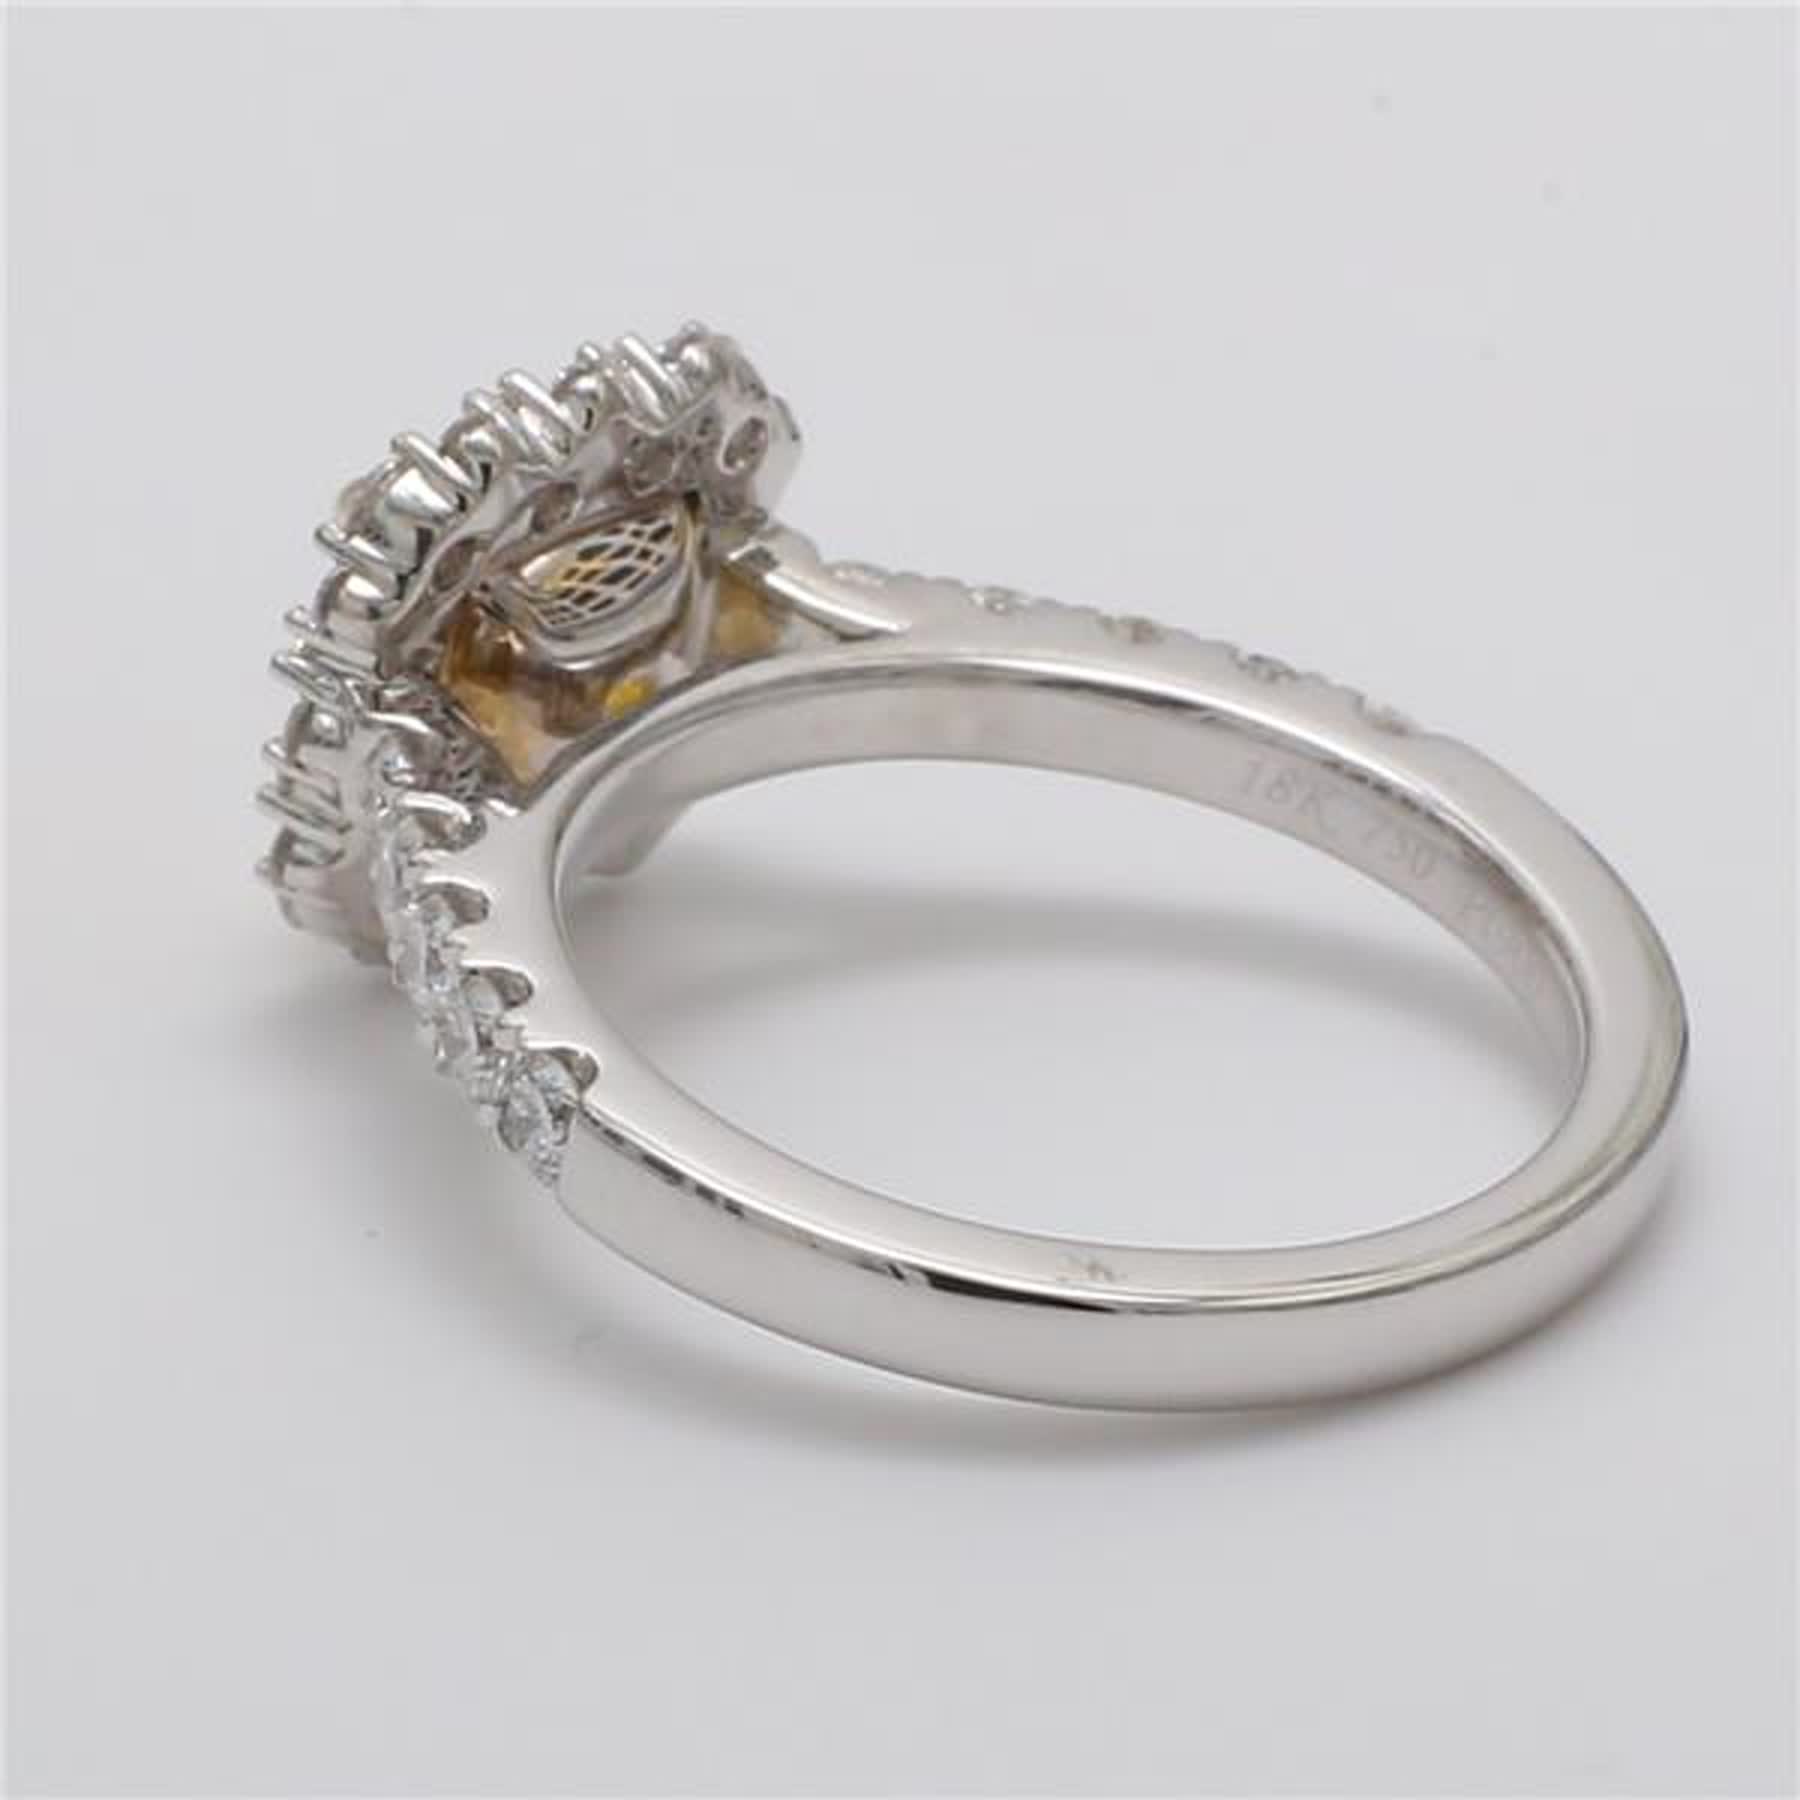 GIA Certified Natural Yellow Cushion and White Diamond 2.11 Carat TW Plat Ring